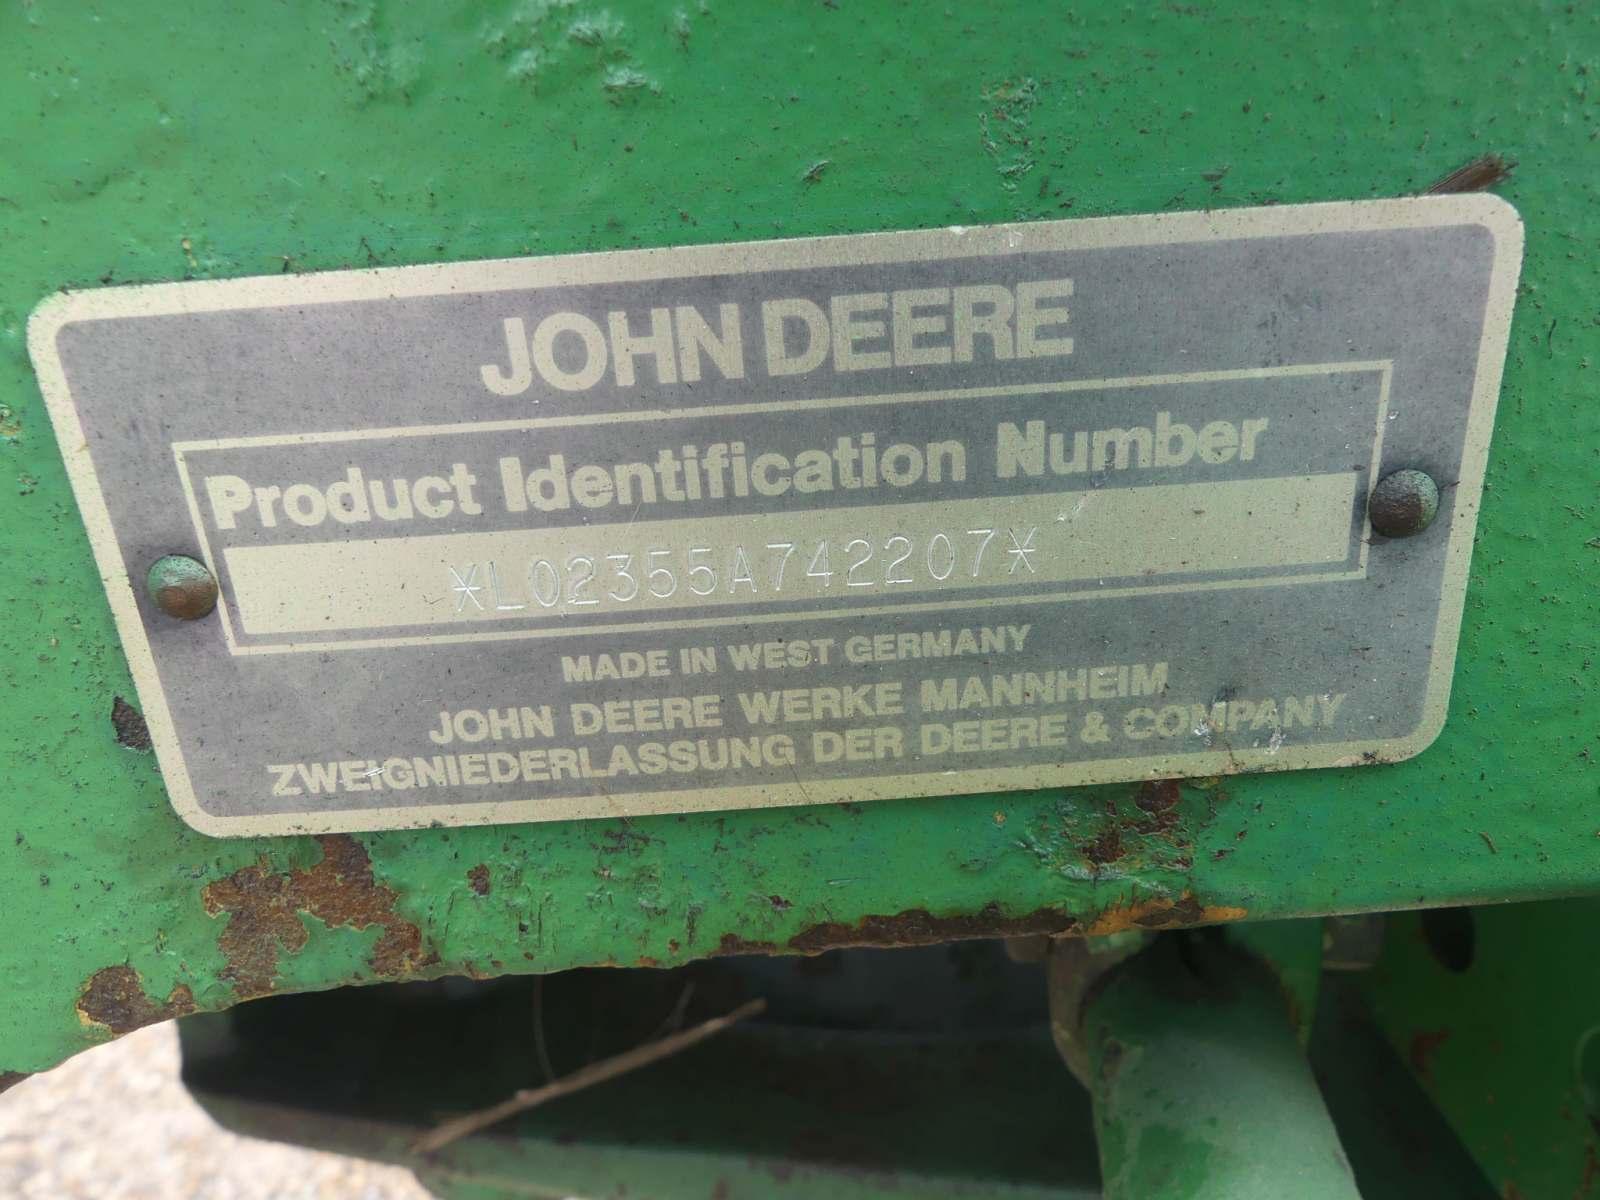 John Deere 2355 Tractor, s/n L02355A742207: 2wd, Rollbar, Restored